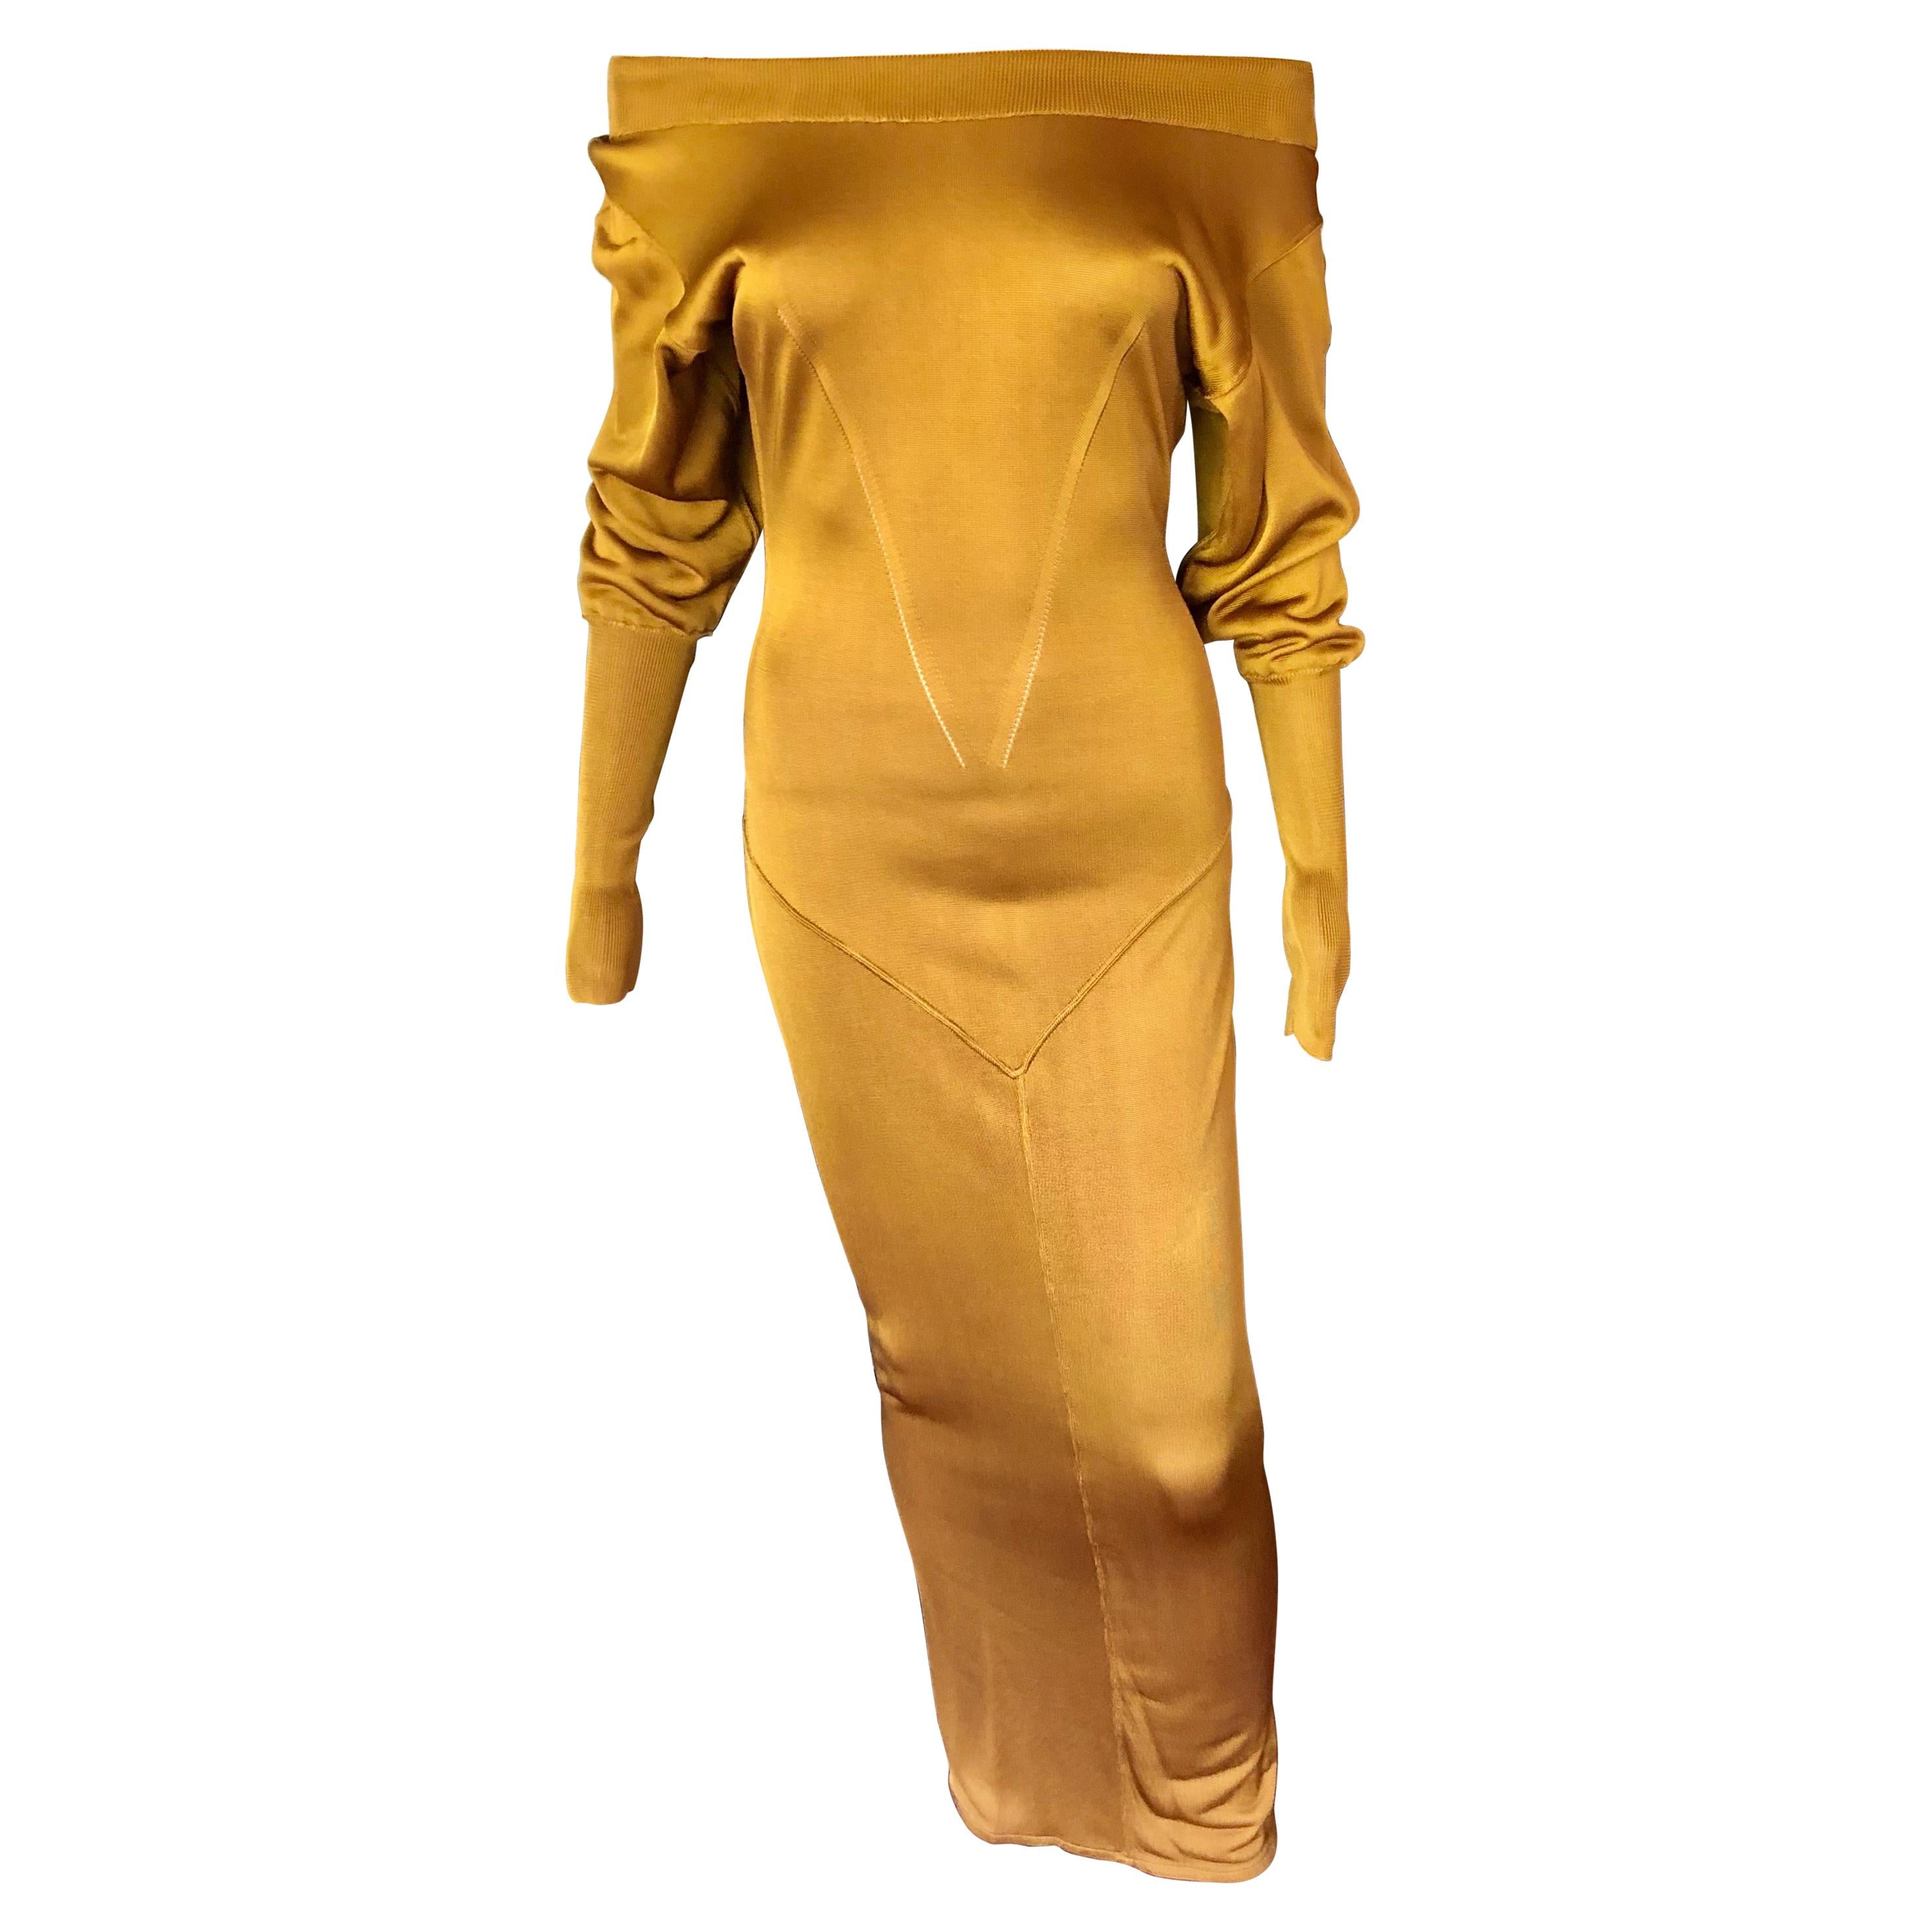 Azzedine Alaïa c. 1990's Vintage Semi-Sheer Gown Maxi Dress